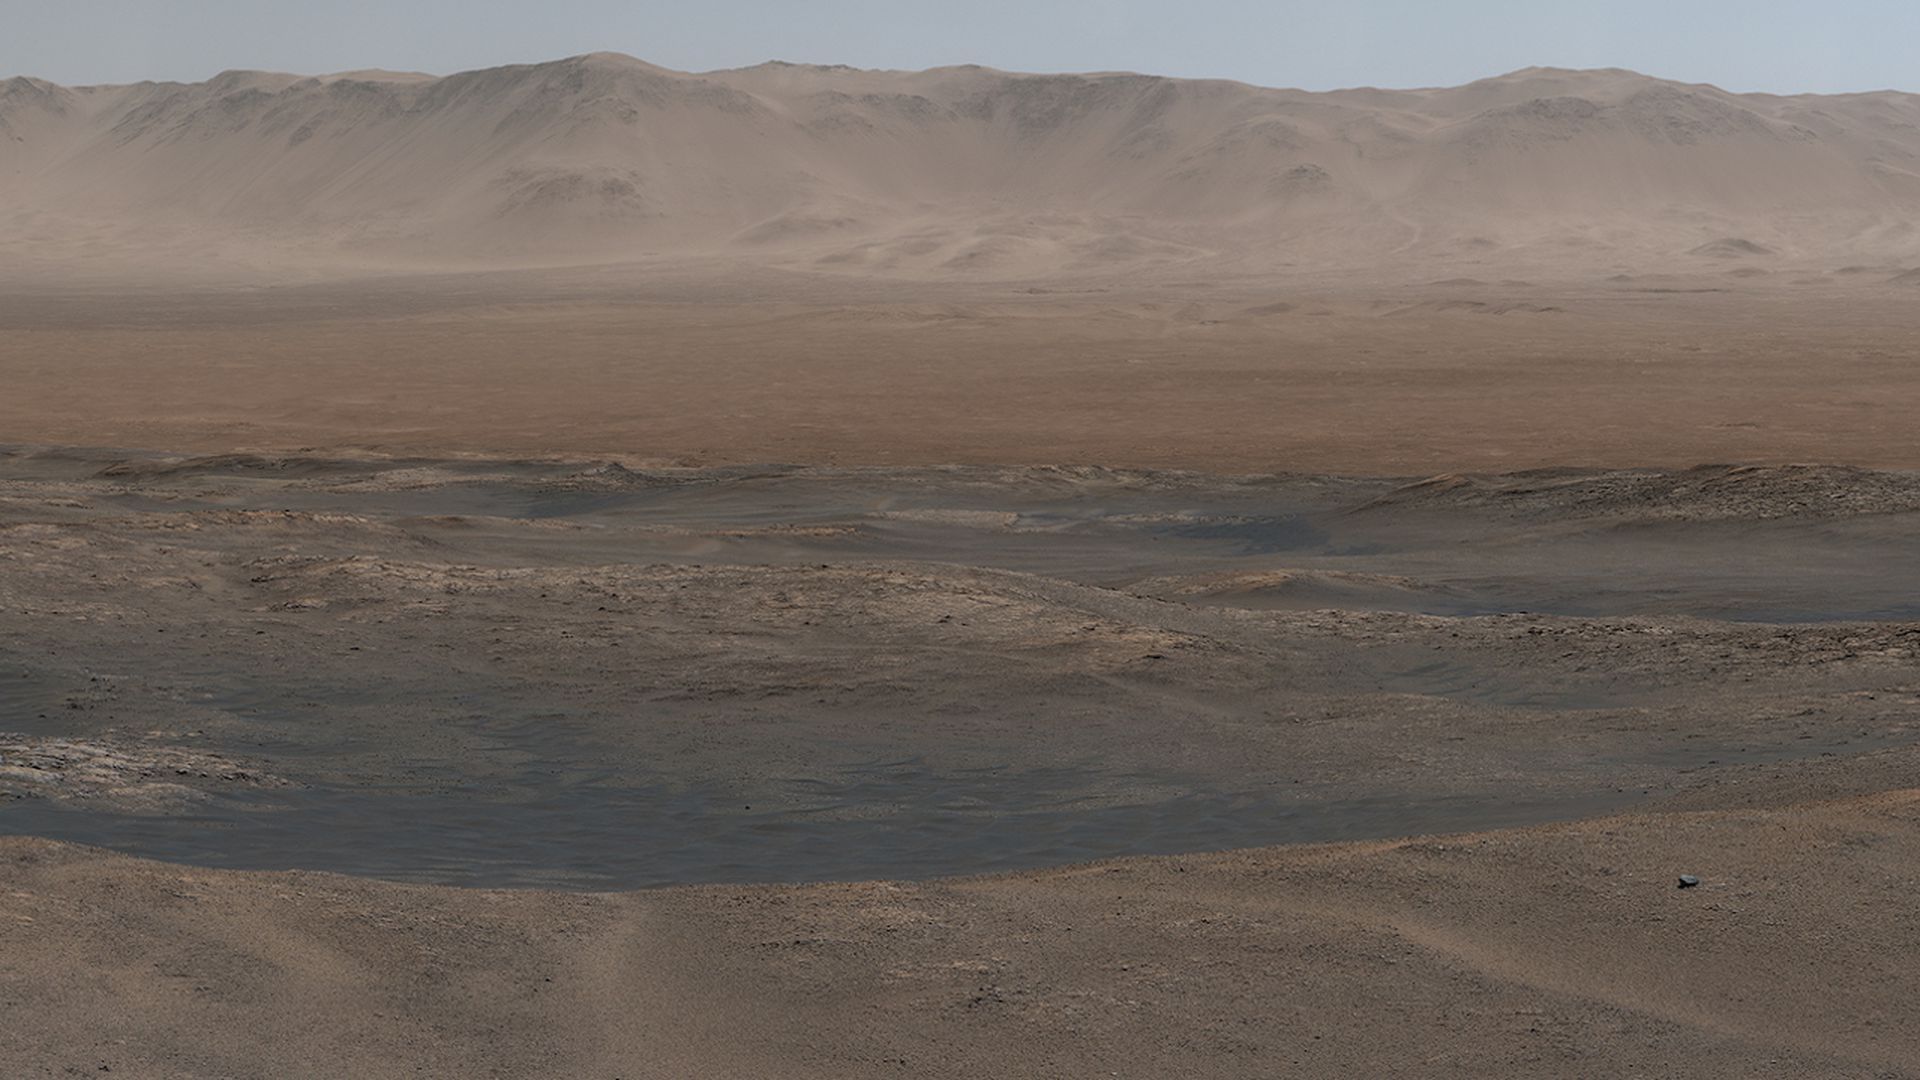  panoramic image of Martian mountains